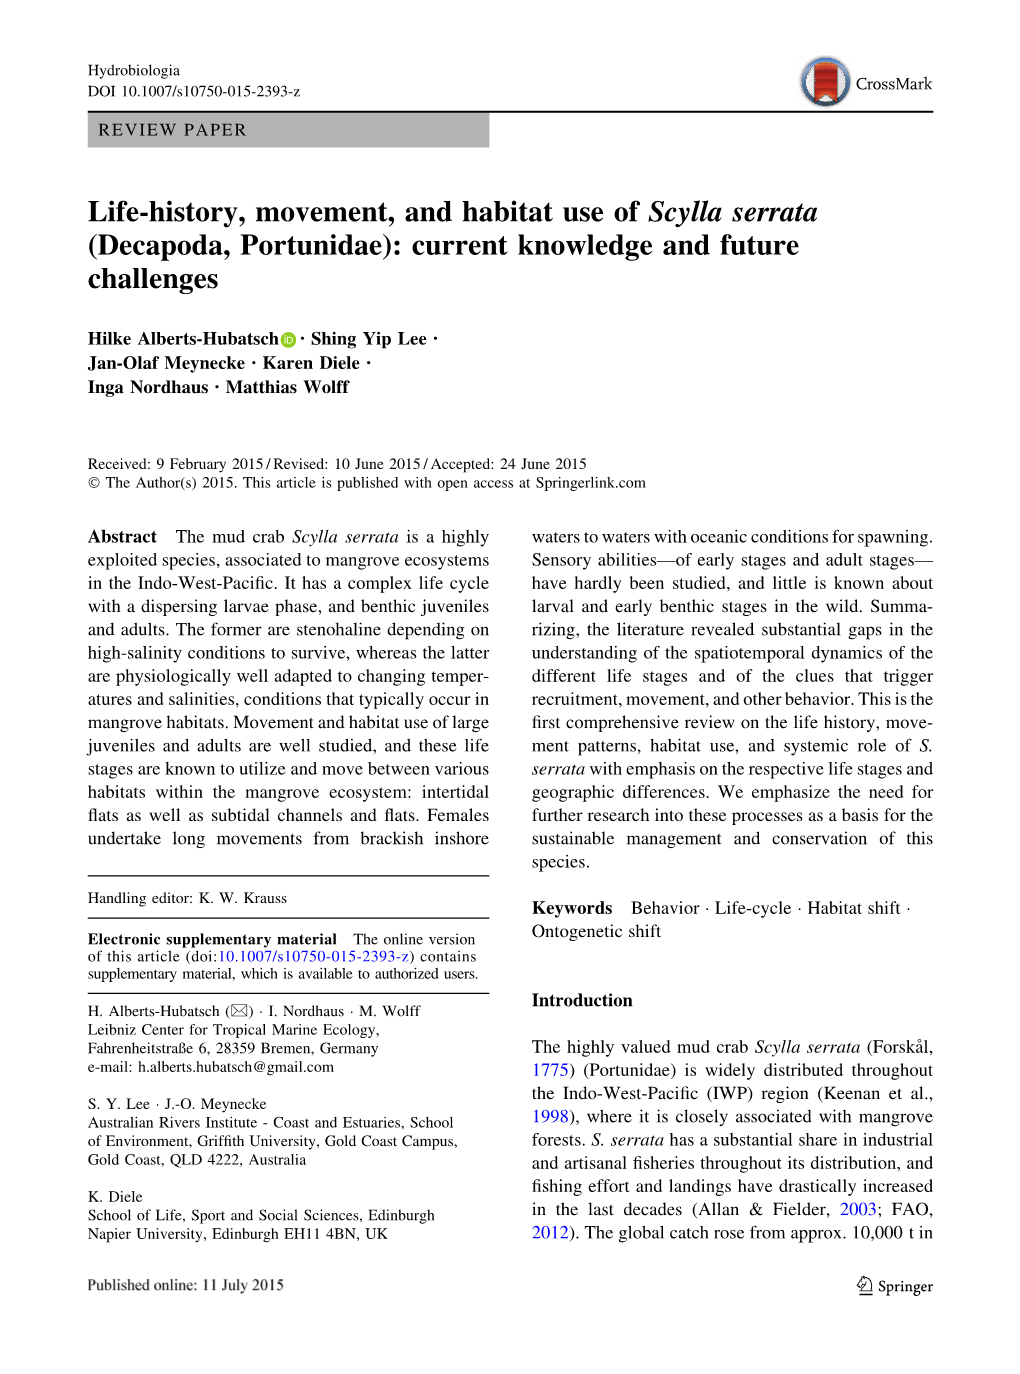 Life-History, Movement, and Habitat Use of Scylla Serrata (Decapoda, Portunidae): Current Knowledge and Future Challenges